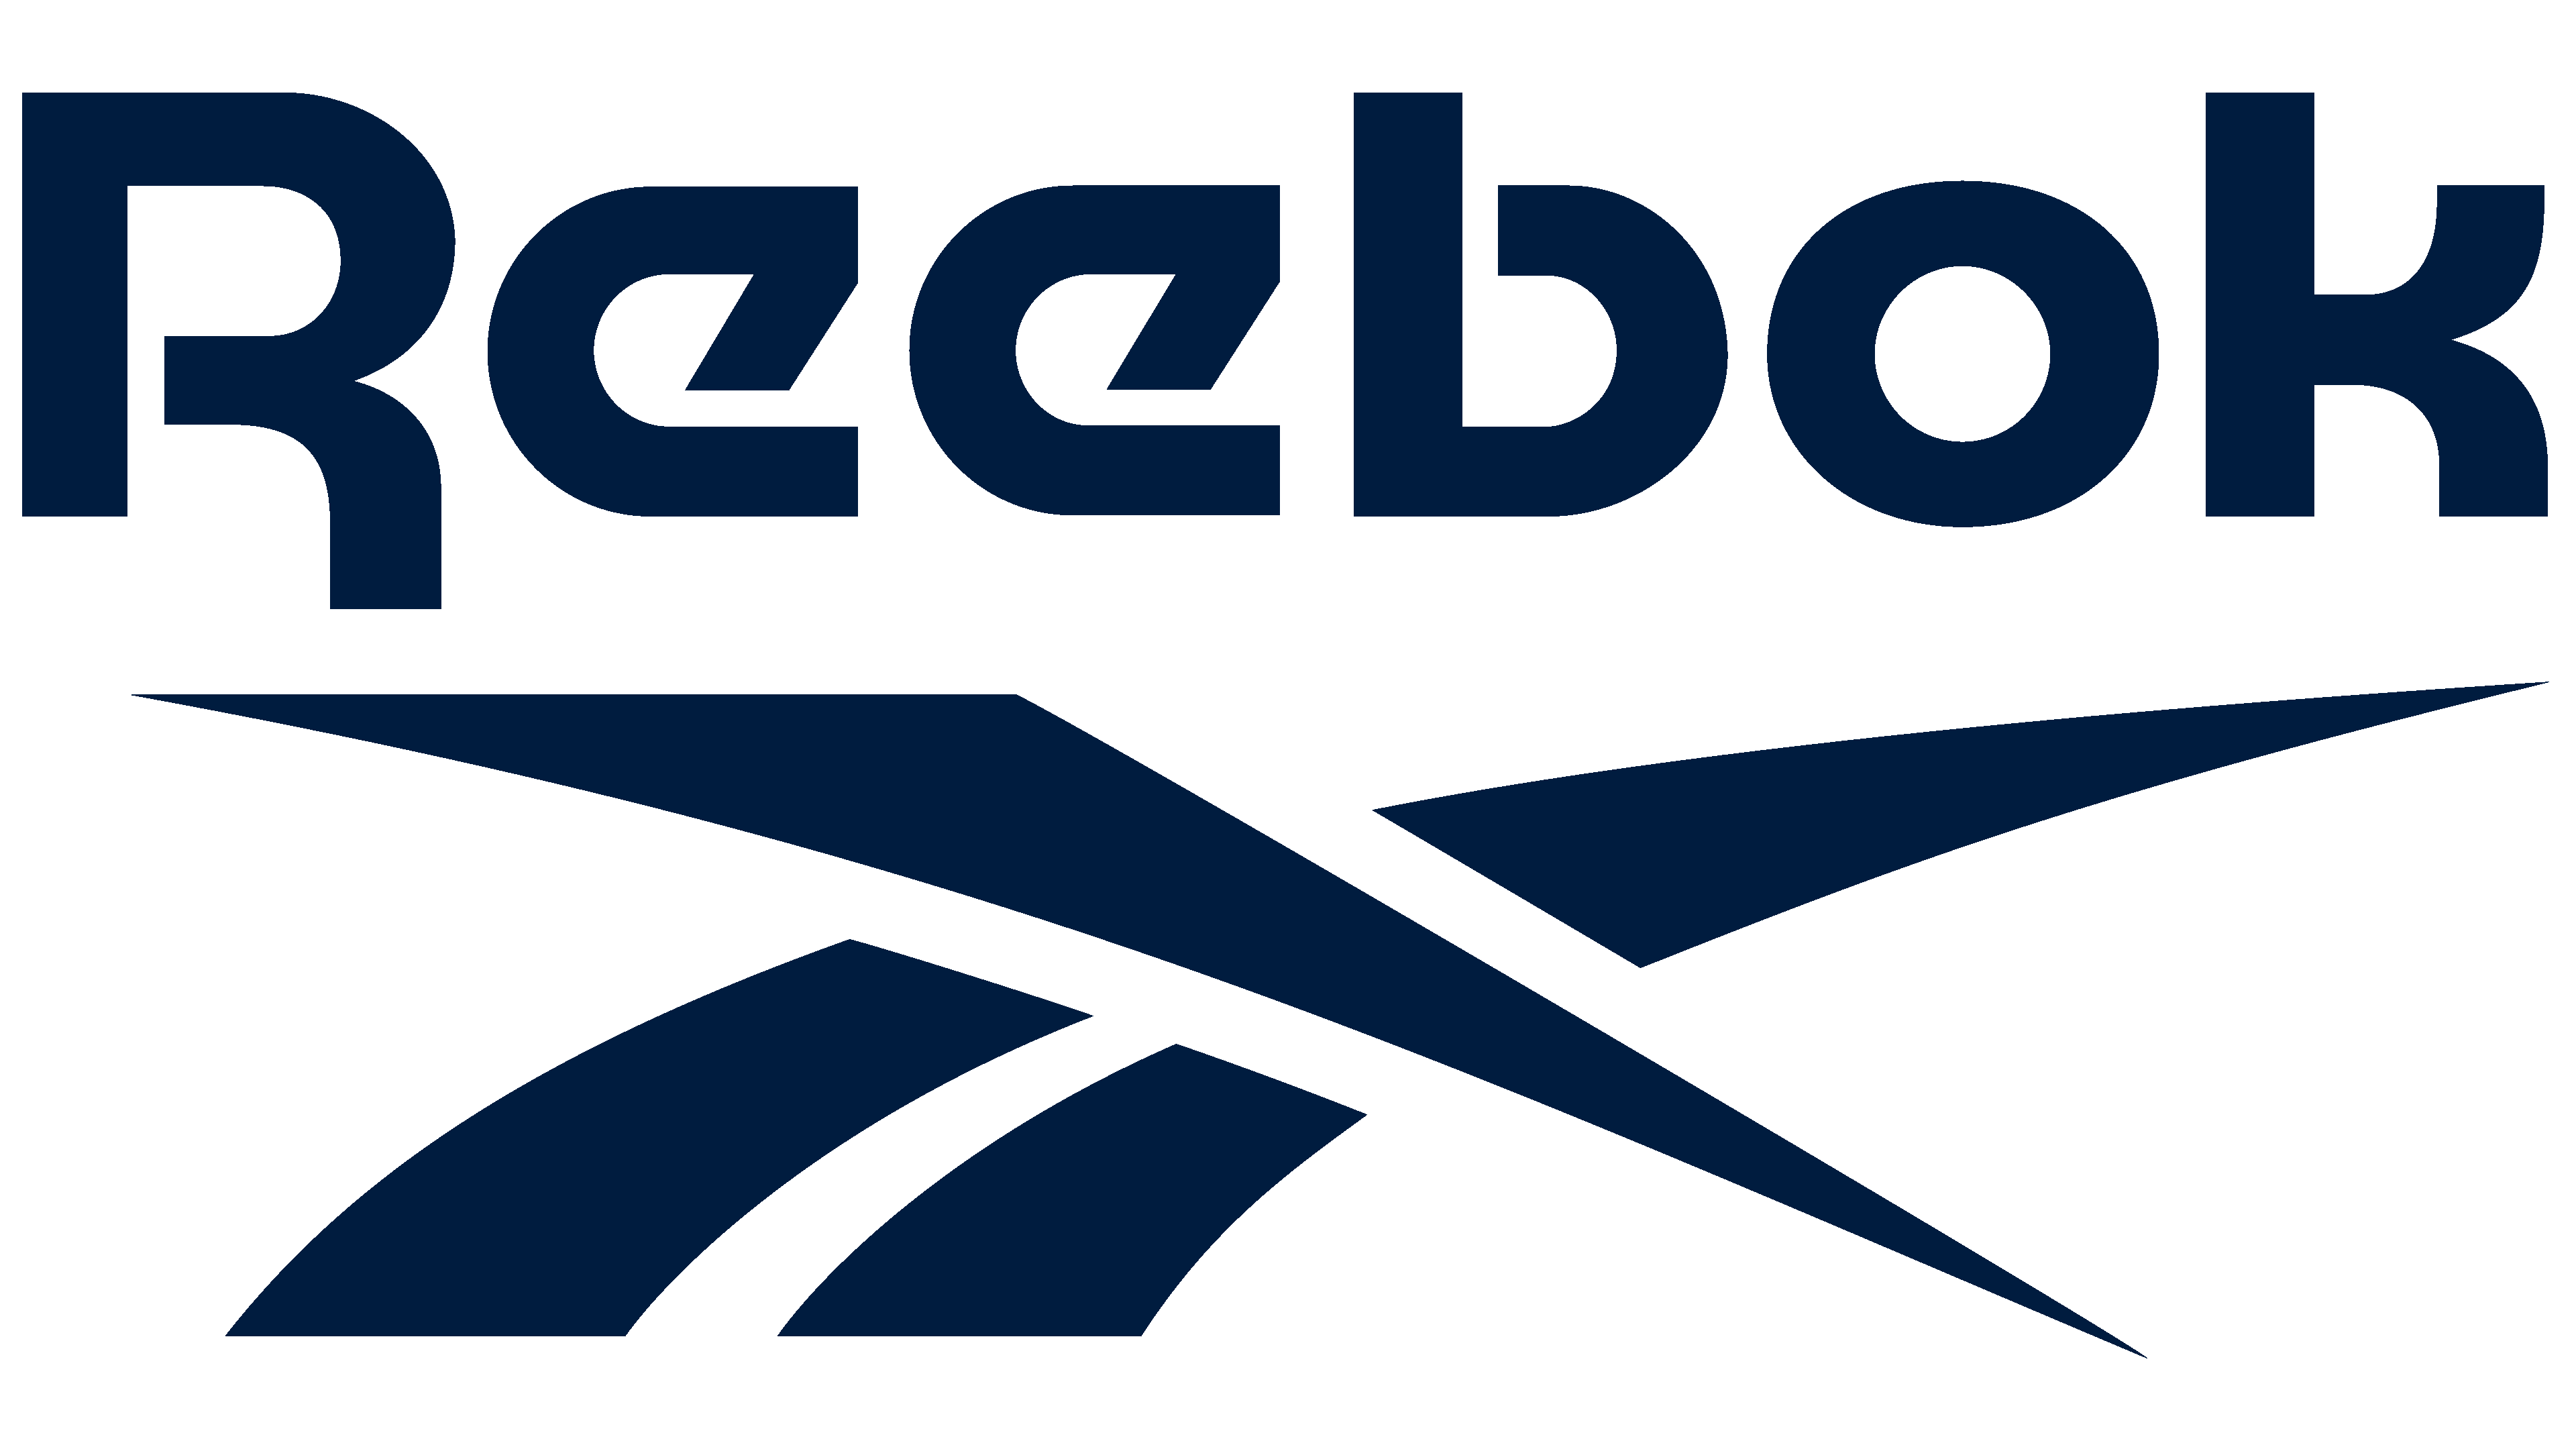 logotipo de reebok